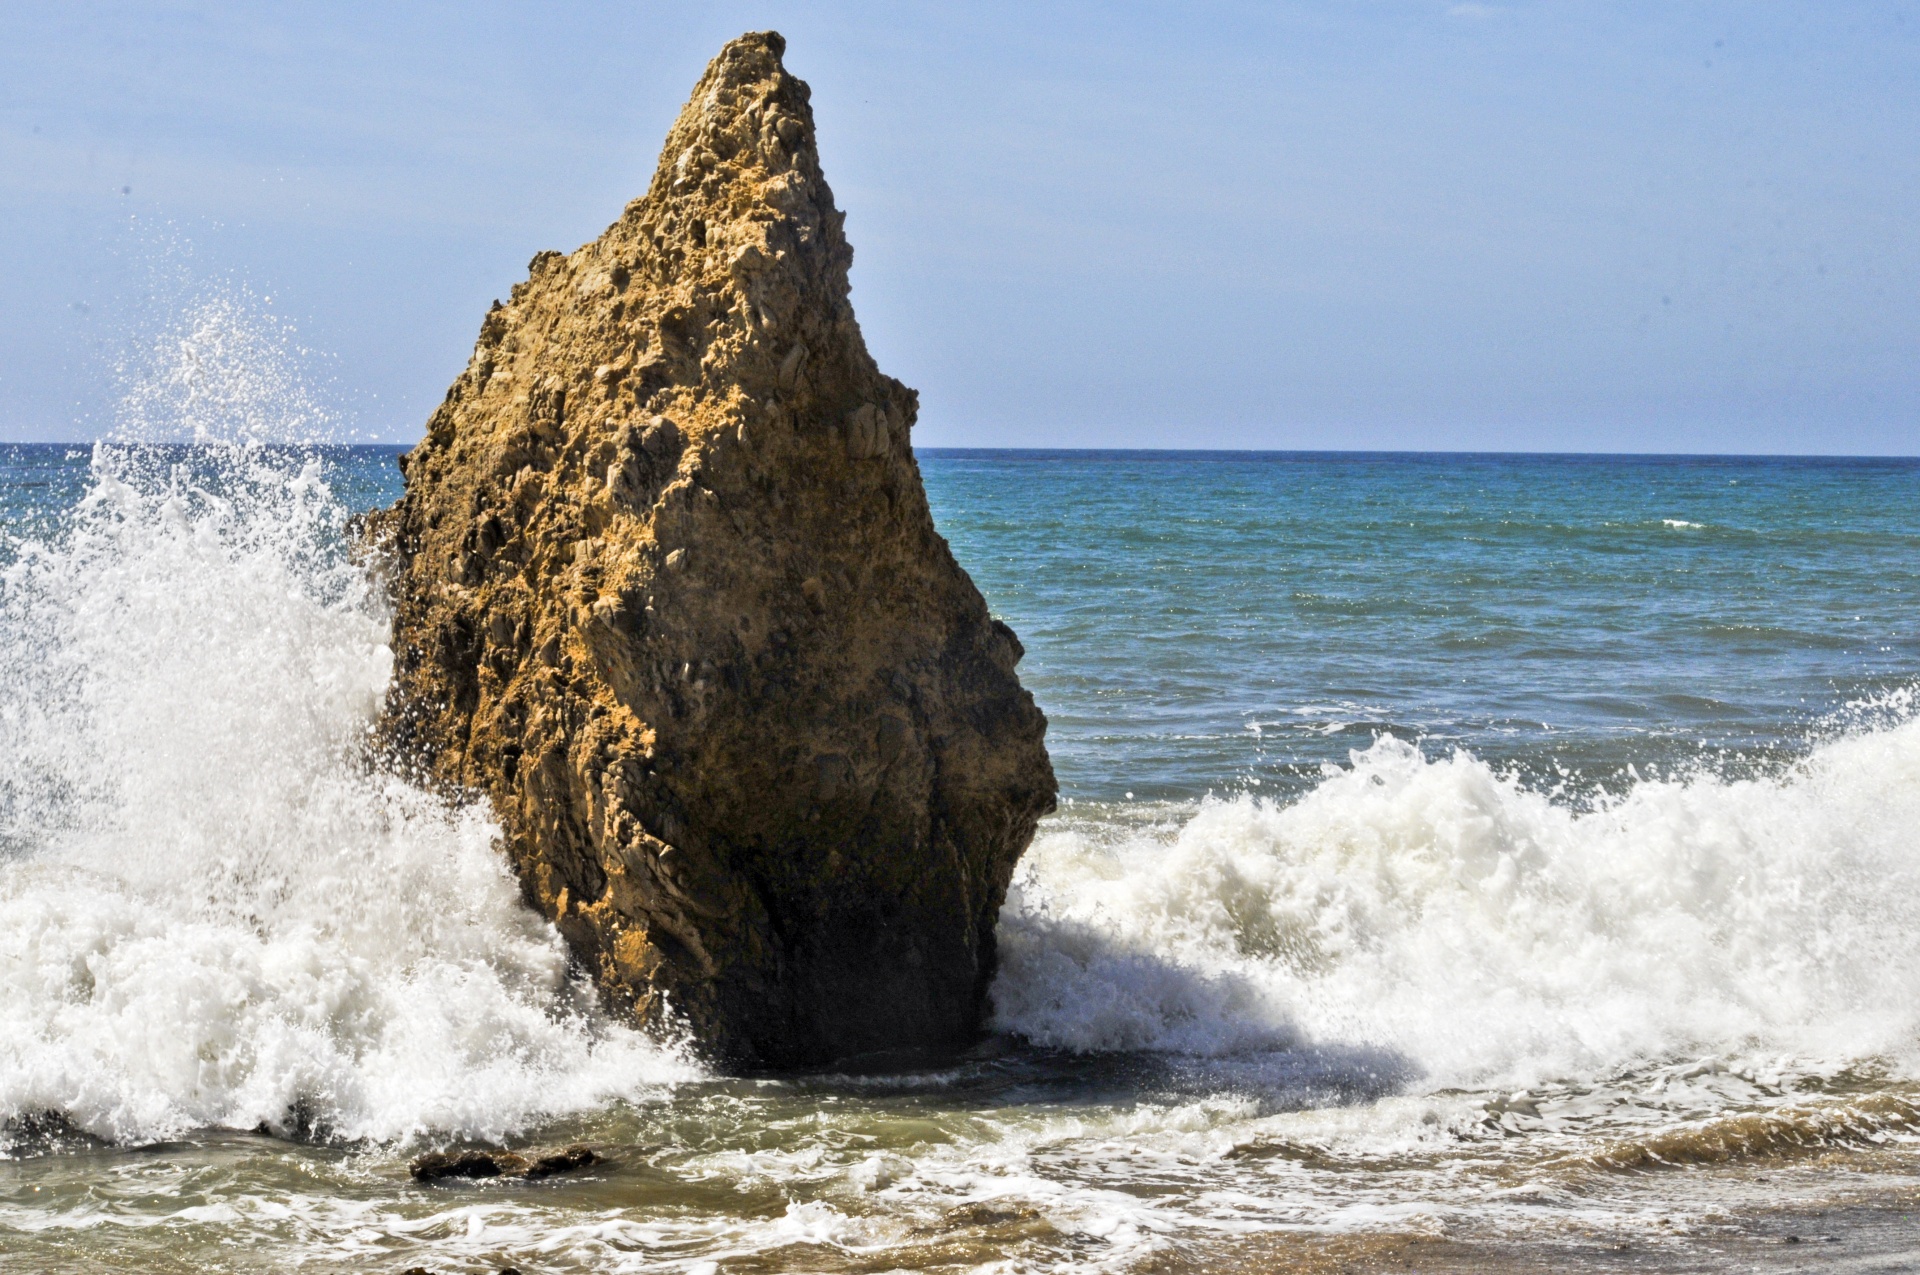 large rock with waves crashing around it